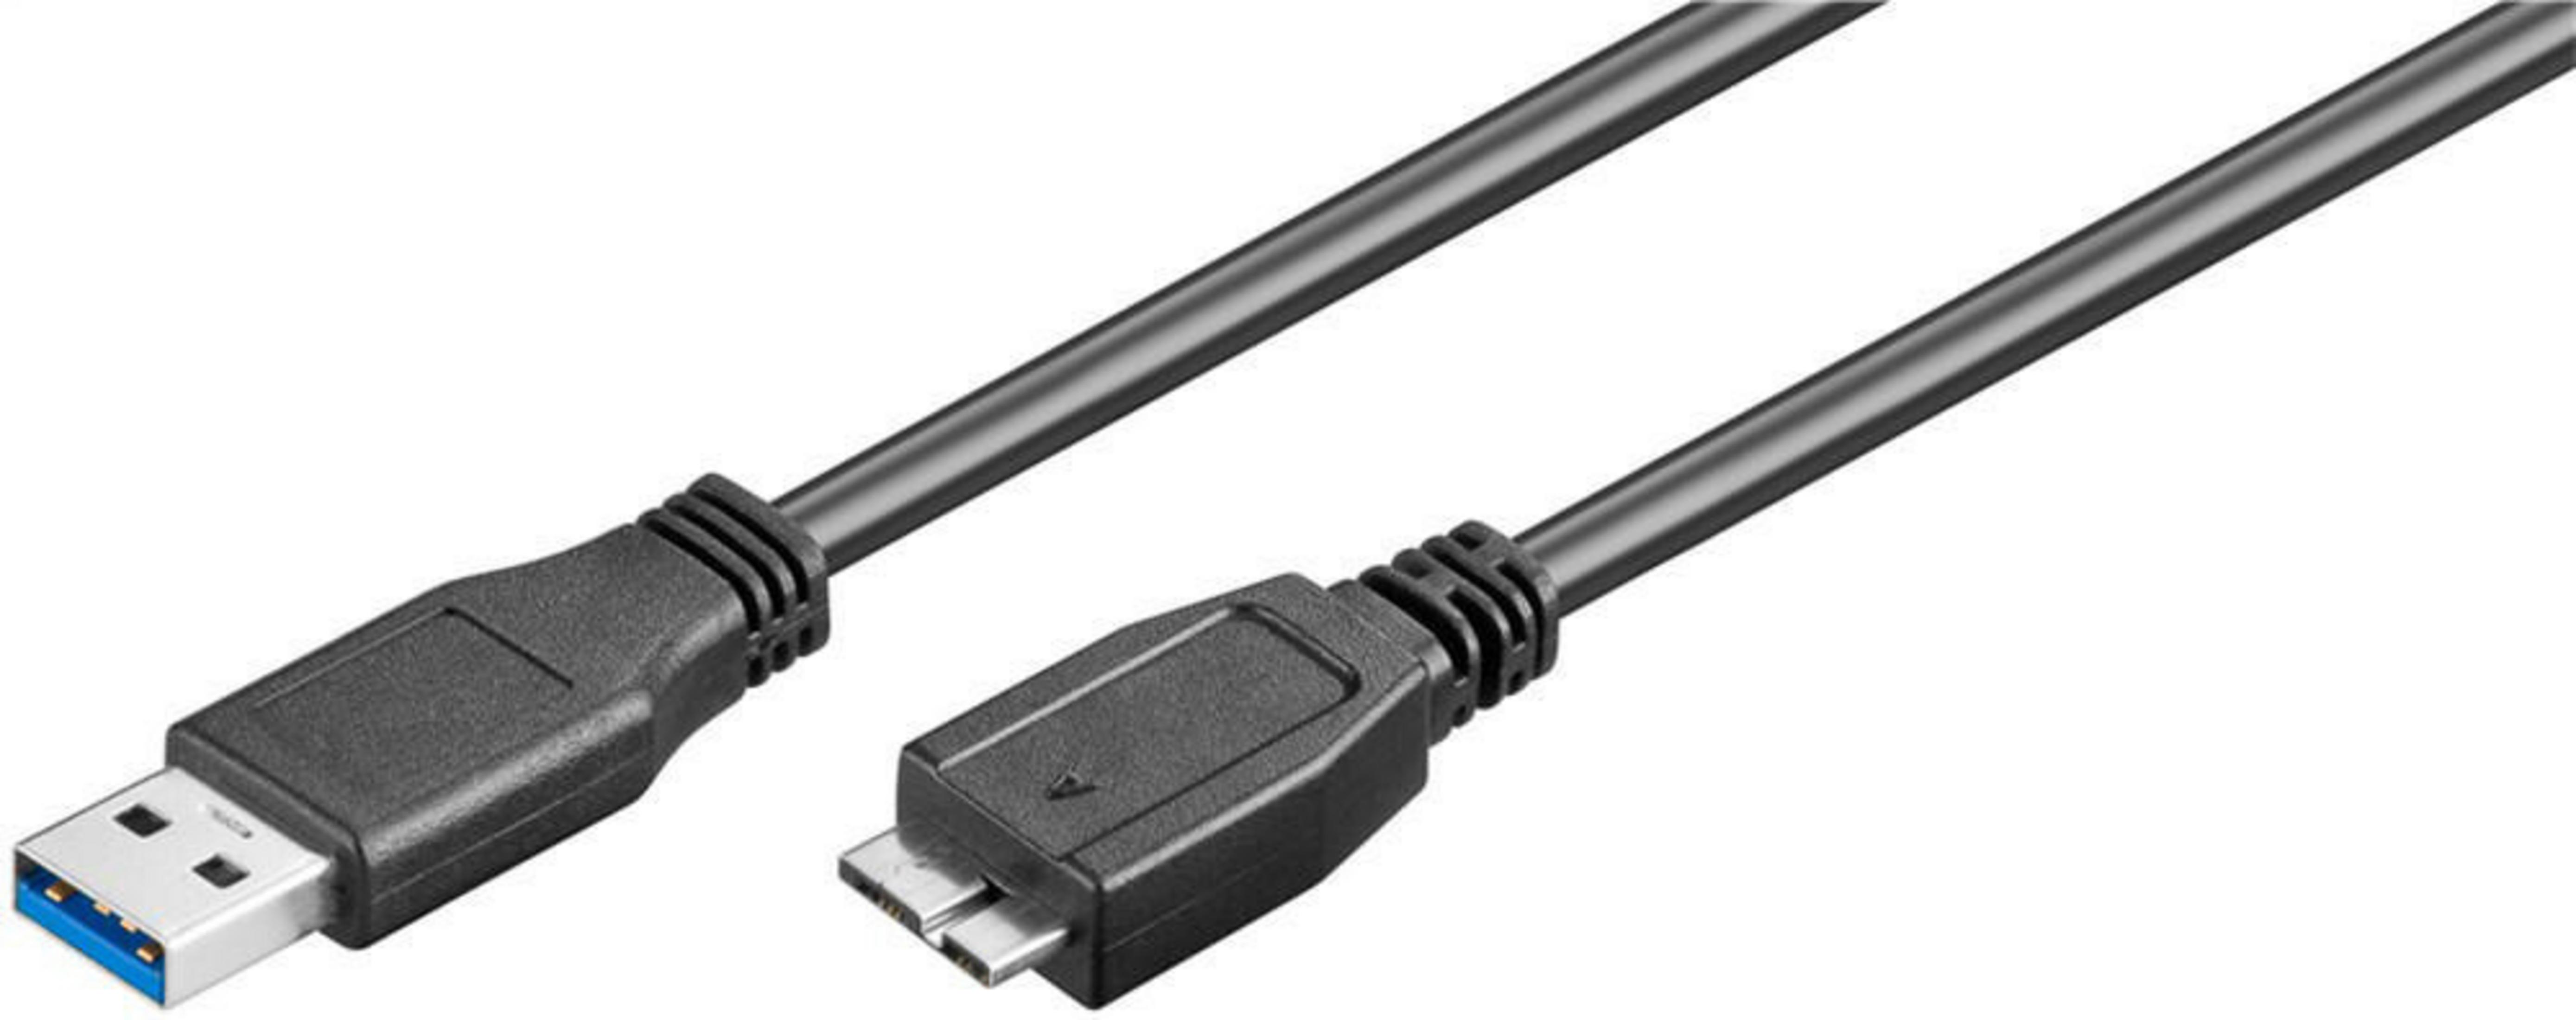 Kabel, 3 3.0 GOOBAY 3M, 95027 SCHWARZ m MICRO-B USB